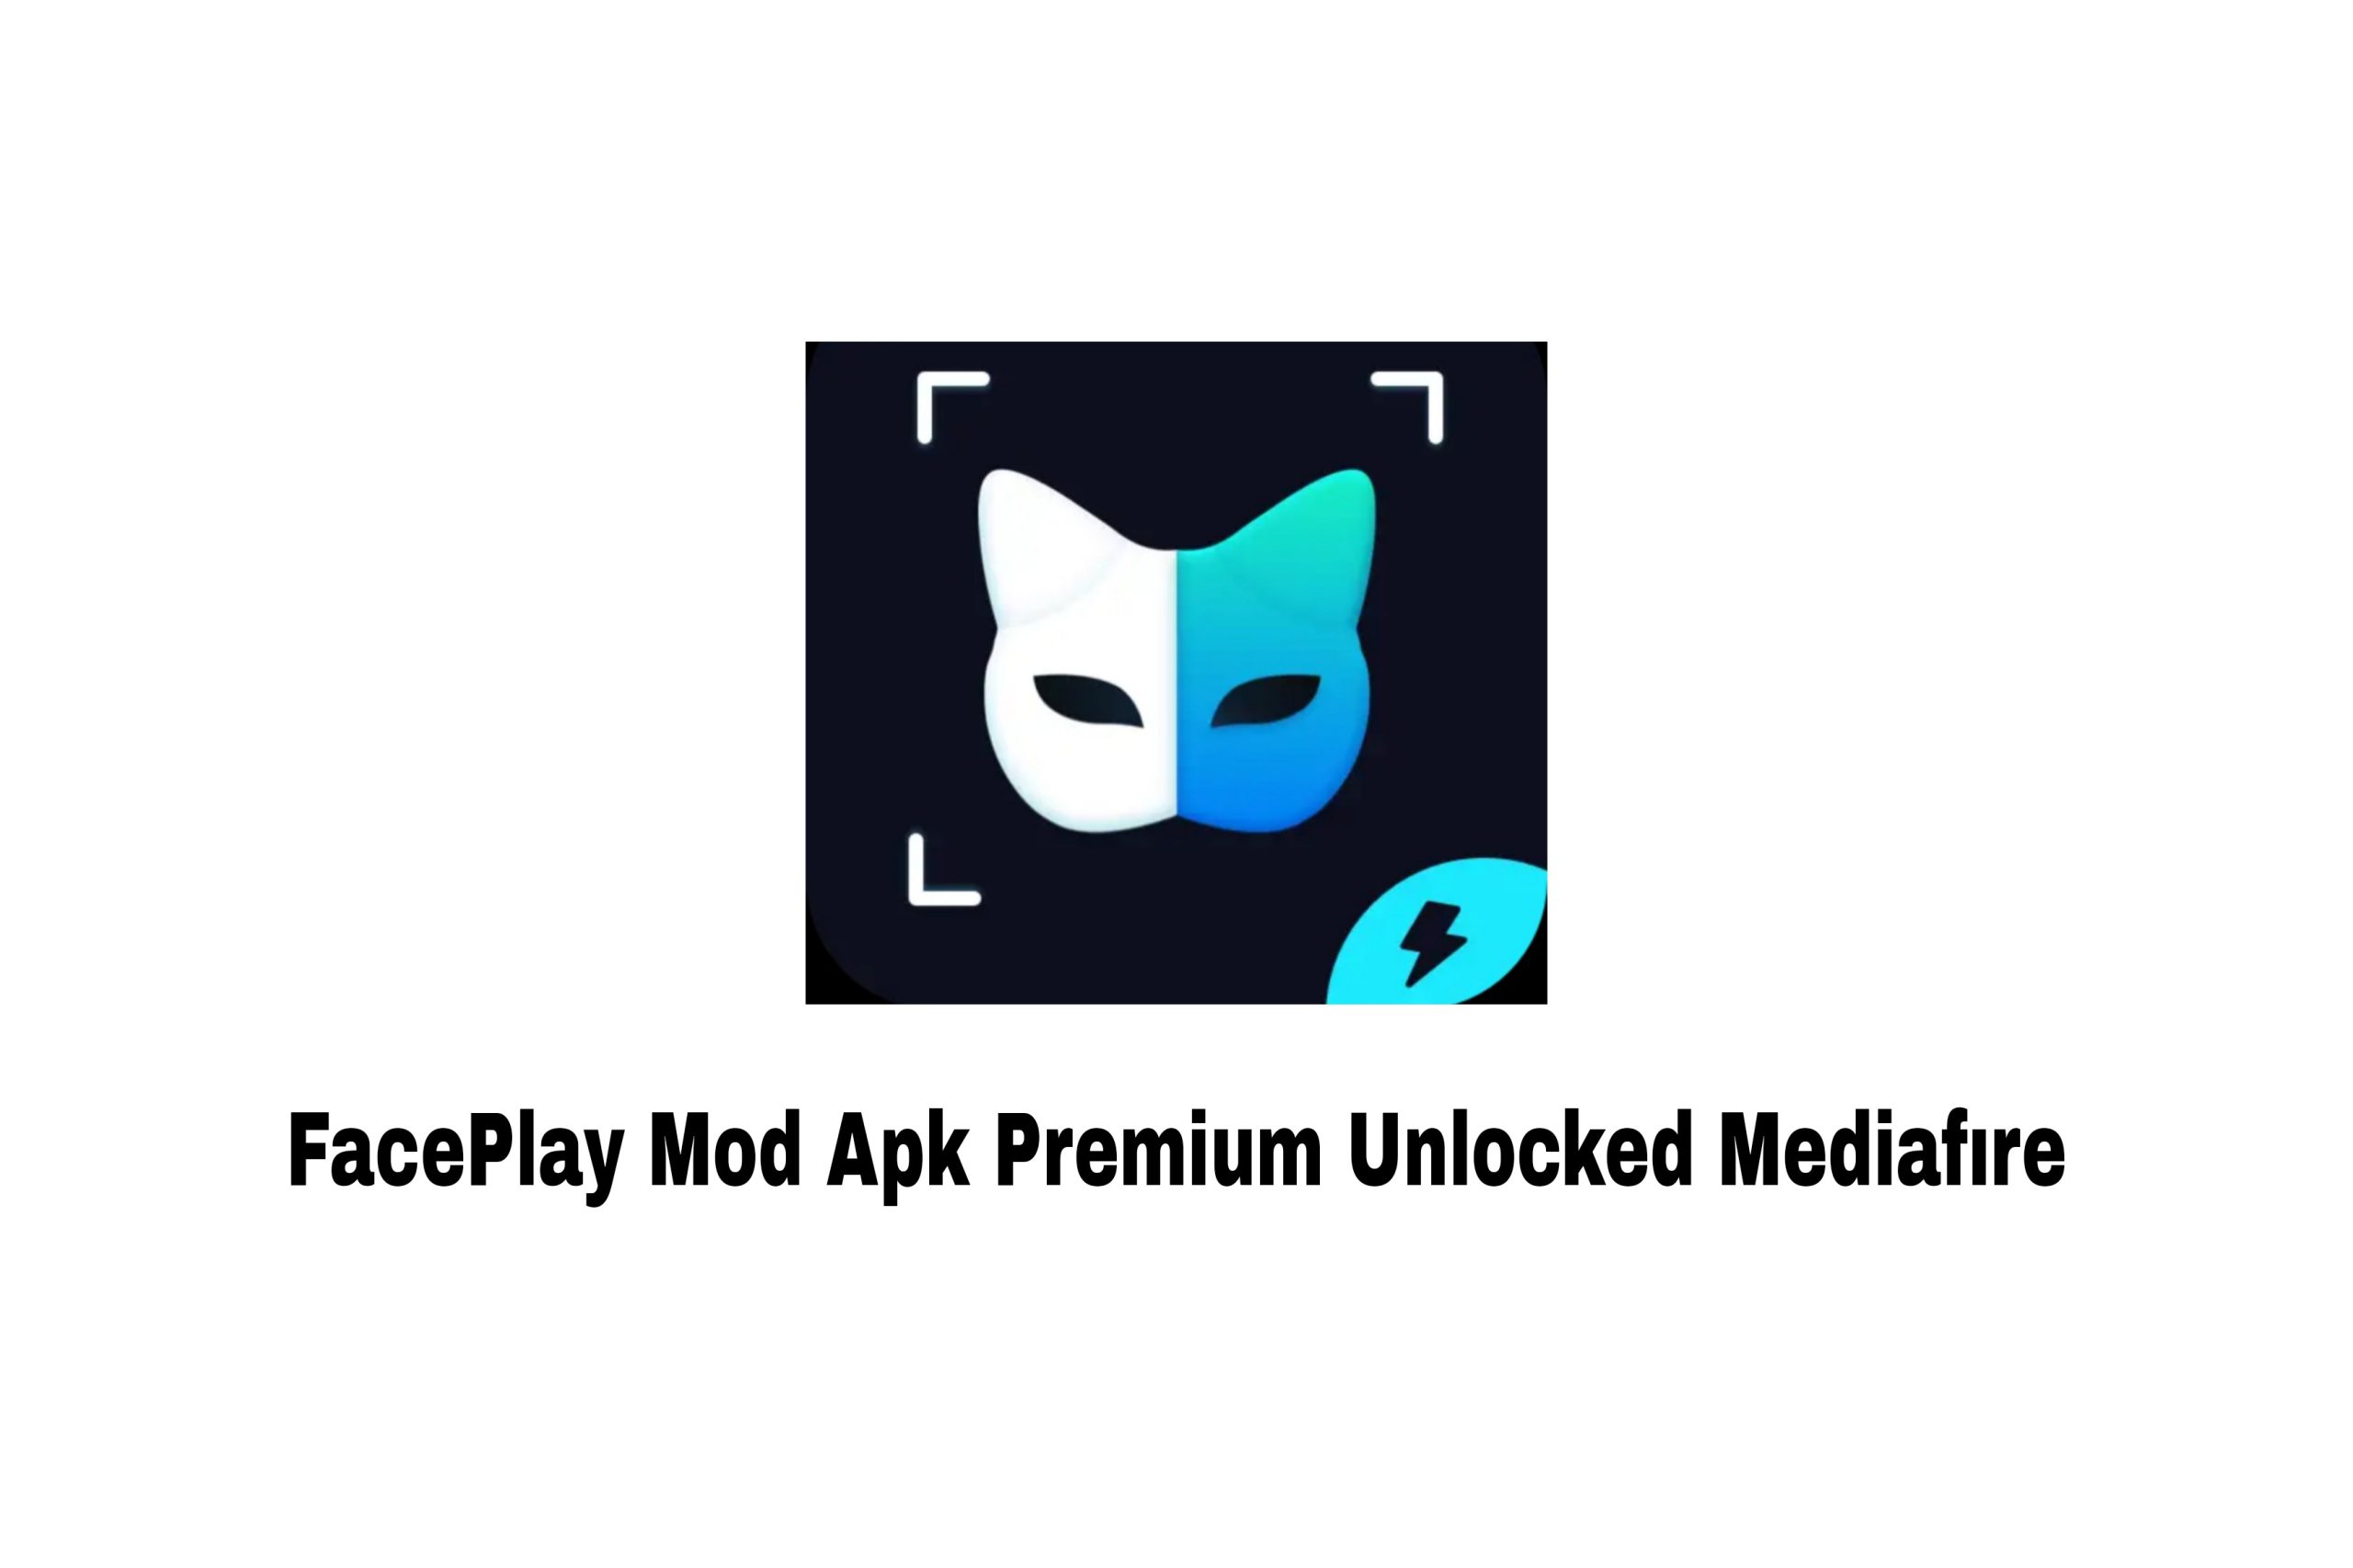 FacePlay Mod Apk Premium Unlocked Mediafire